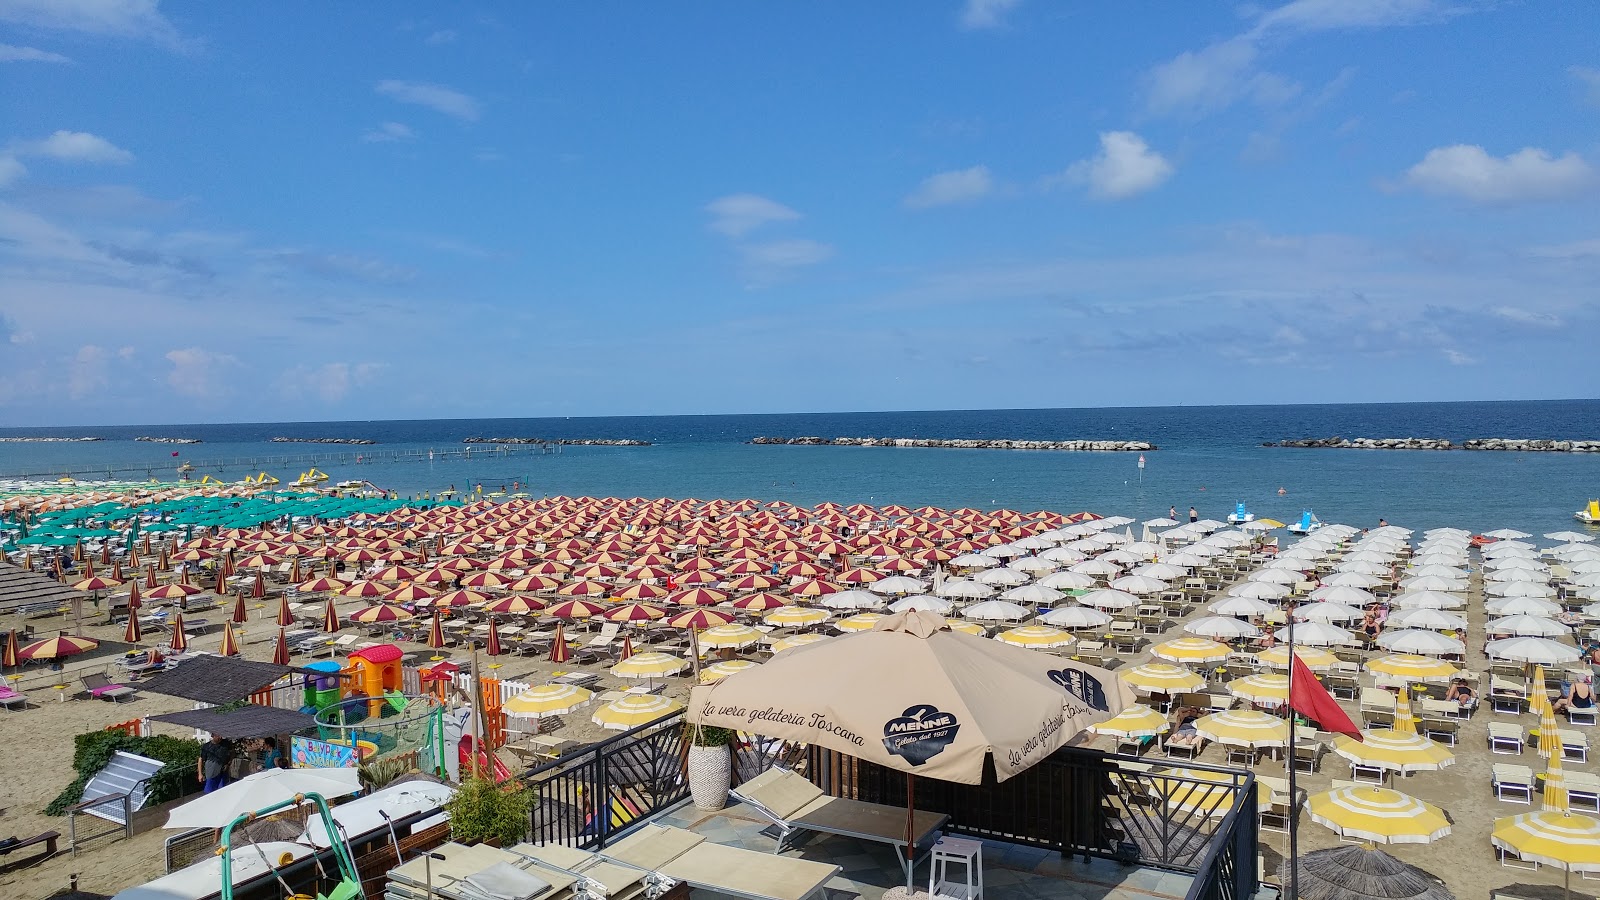 Spiaggia di Gatteo Mare的照片 海滩度假区